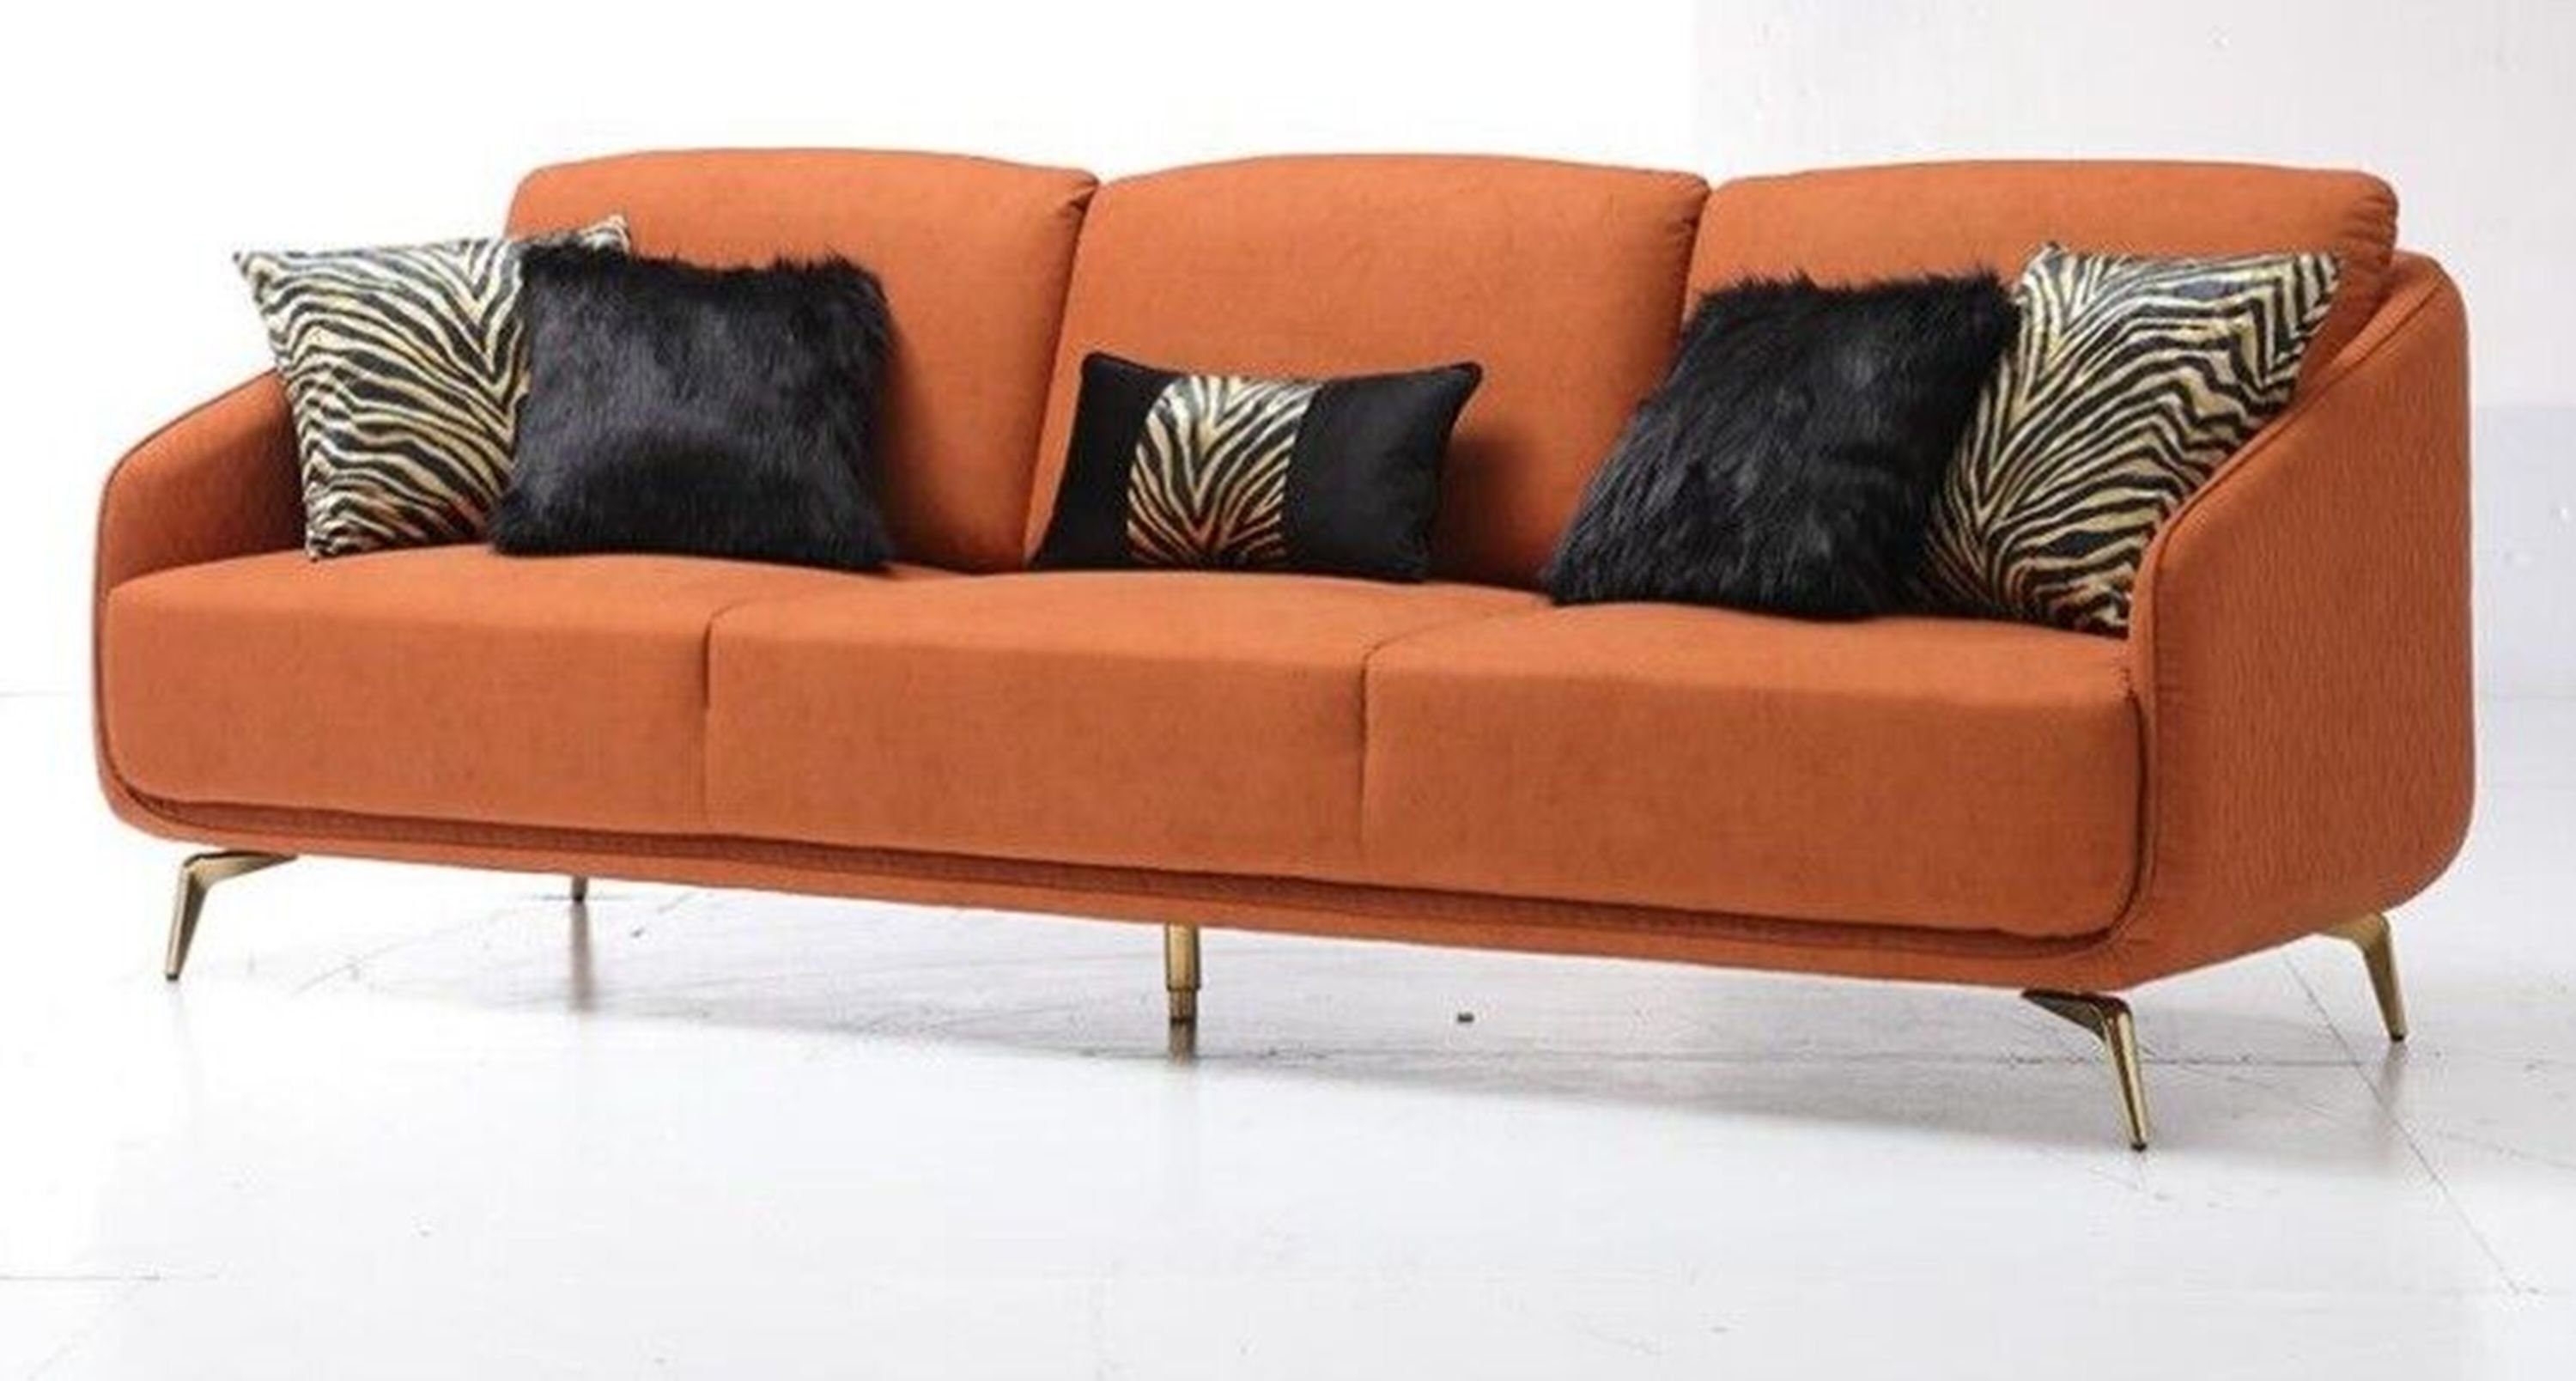 JVmoebel Sofa Stillvolle luxus Sofagarnitur Europe Made in Design Edelstahl Neu, 3+2+1 Sitzer